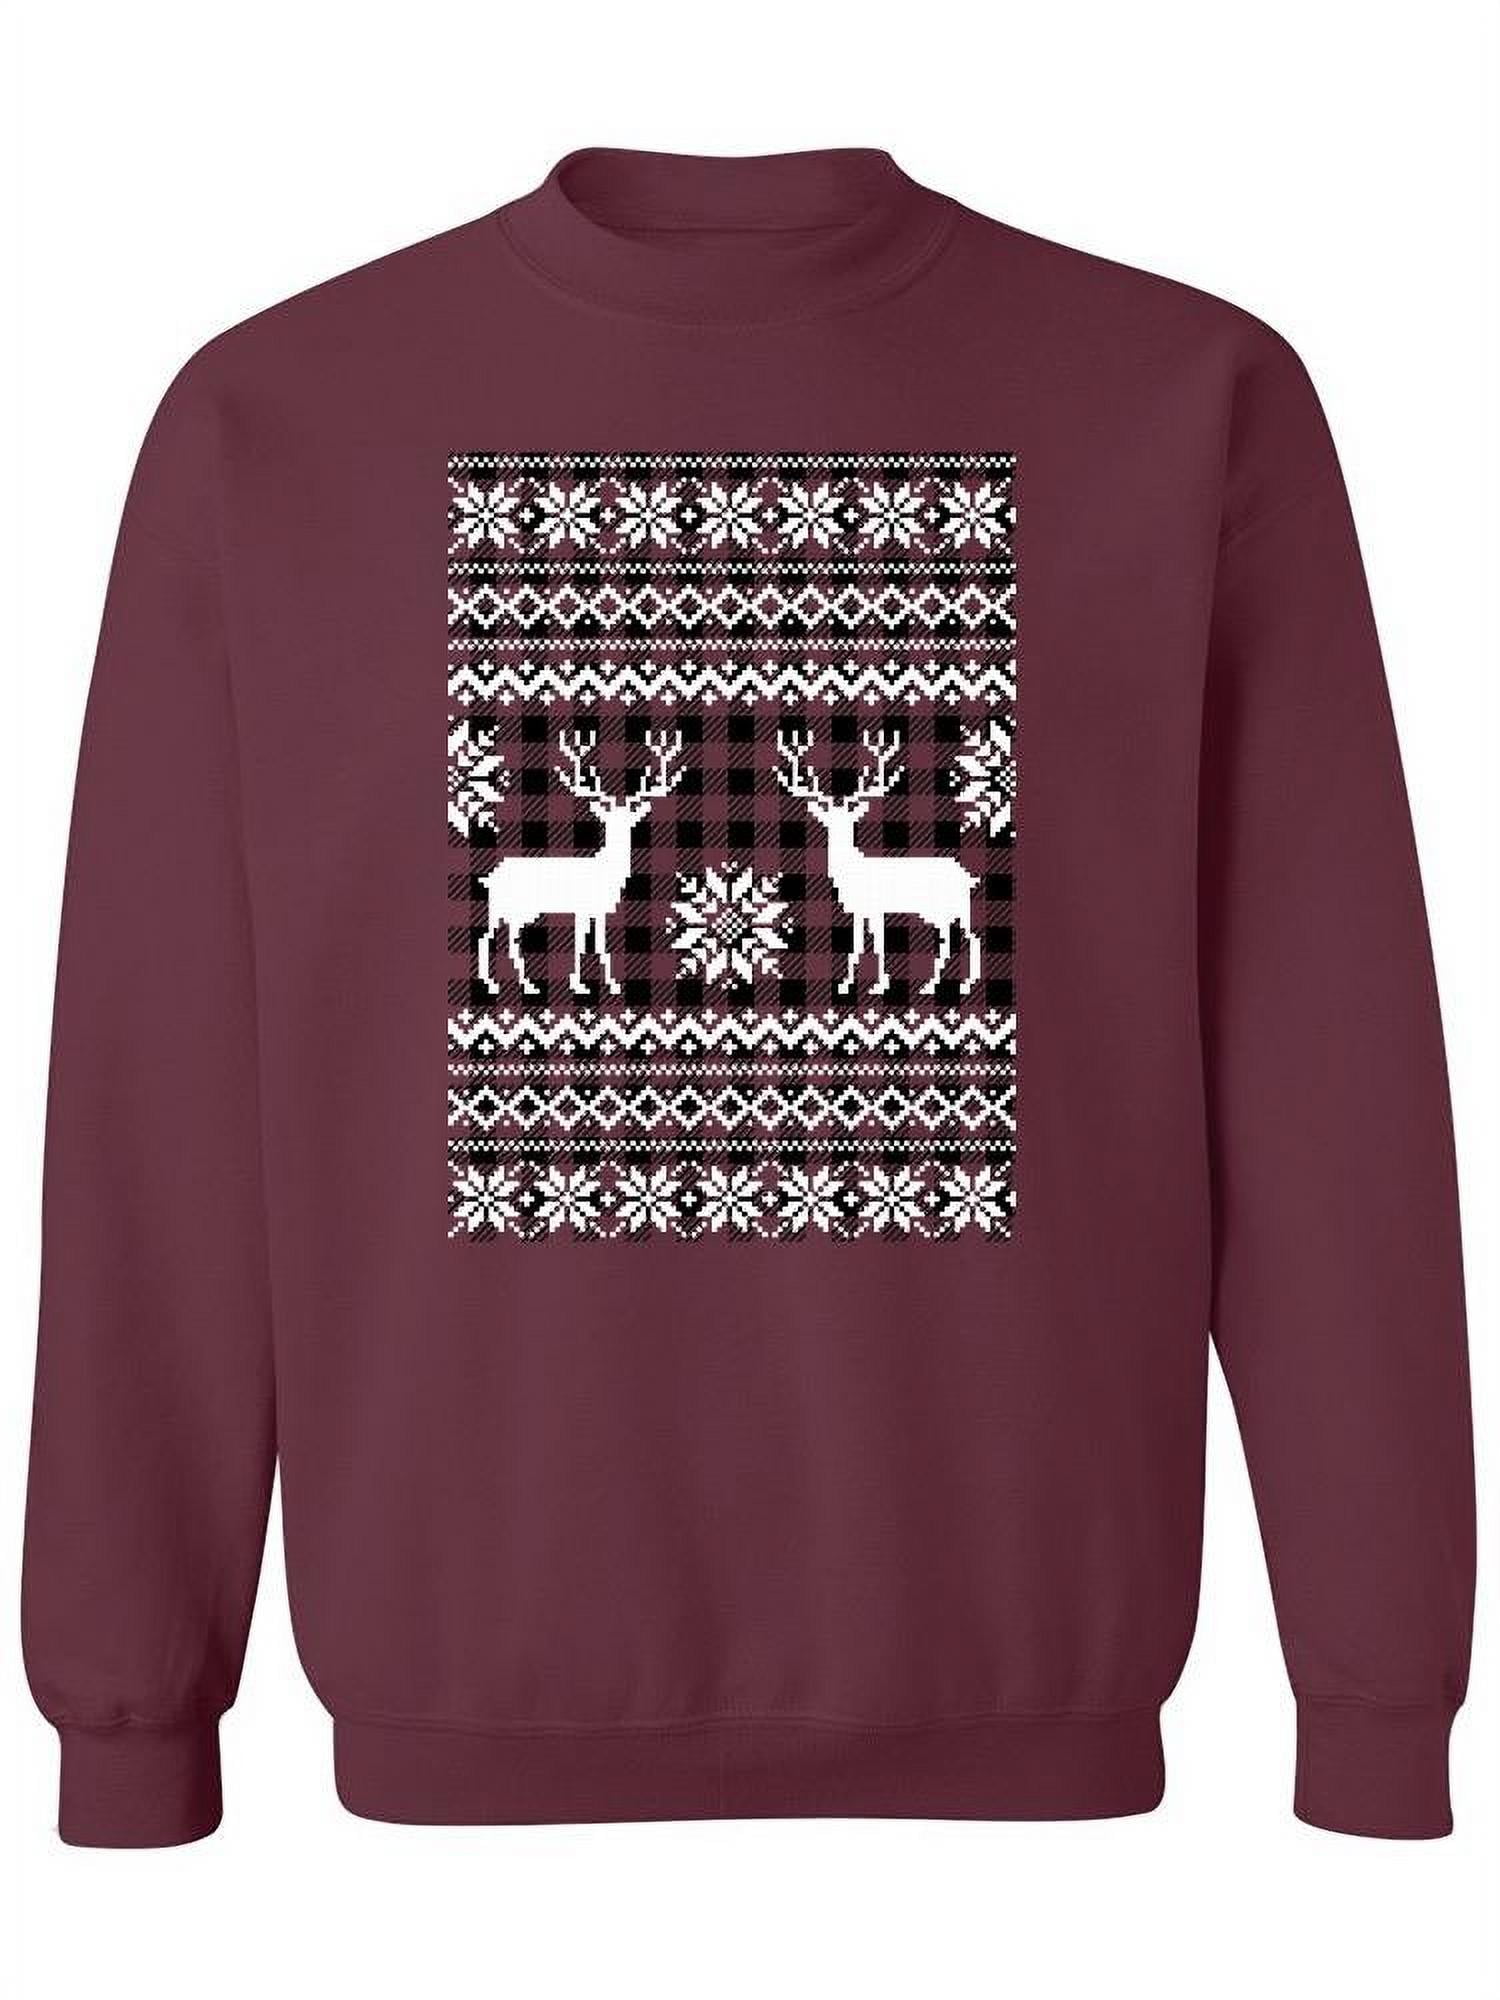 Christmas And New Year Design Sweatshirt Women -Image by Shutterstock ...